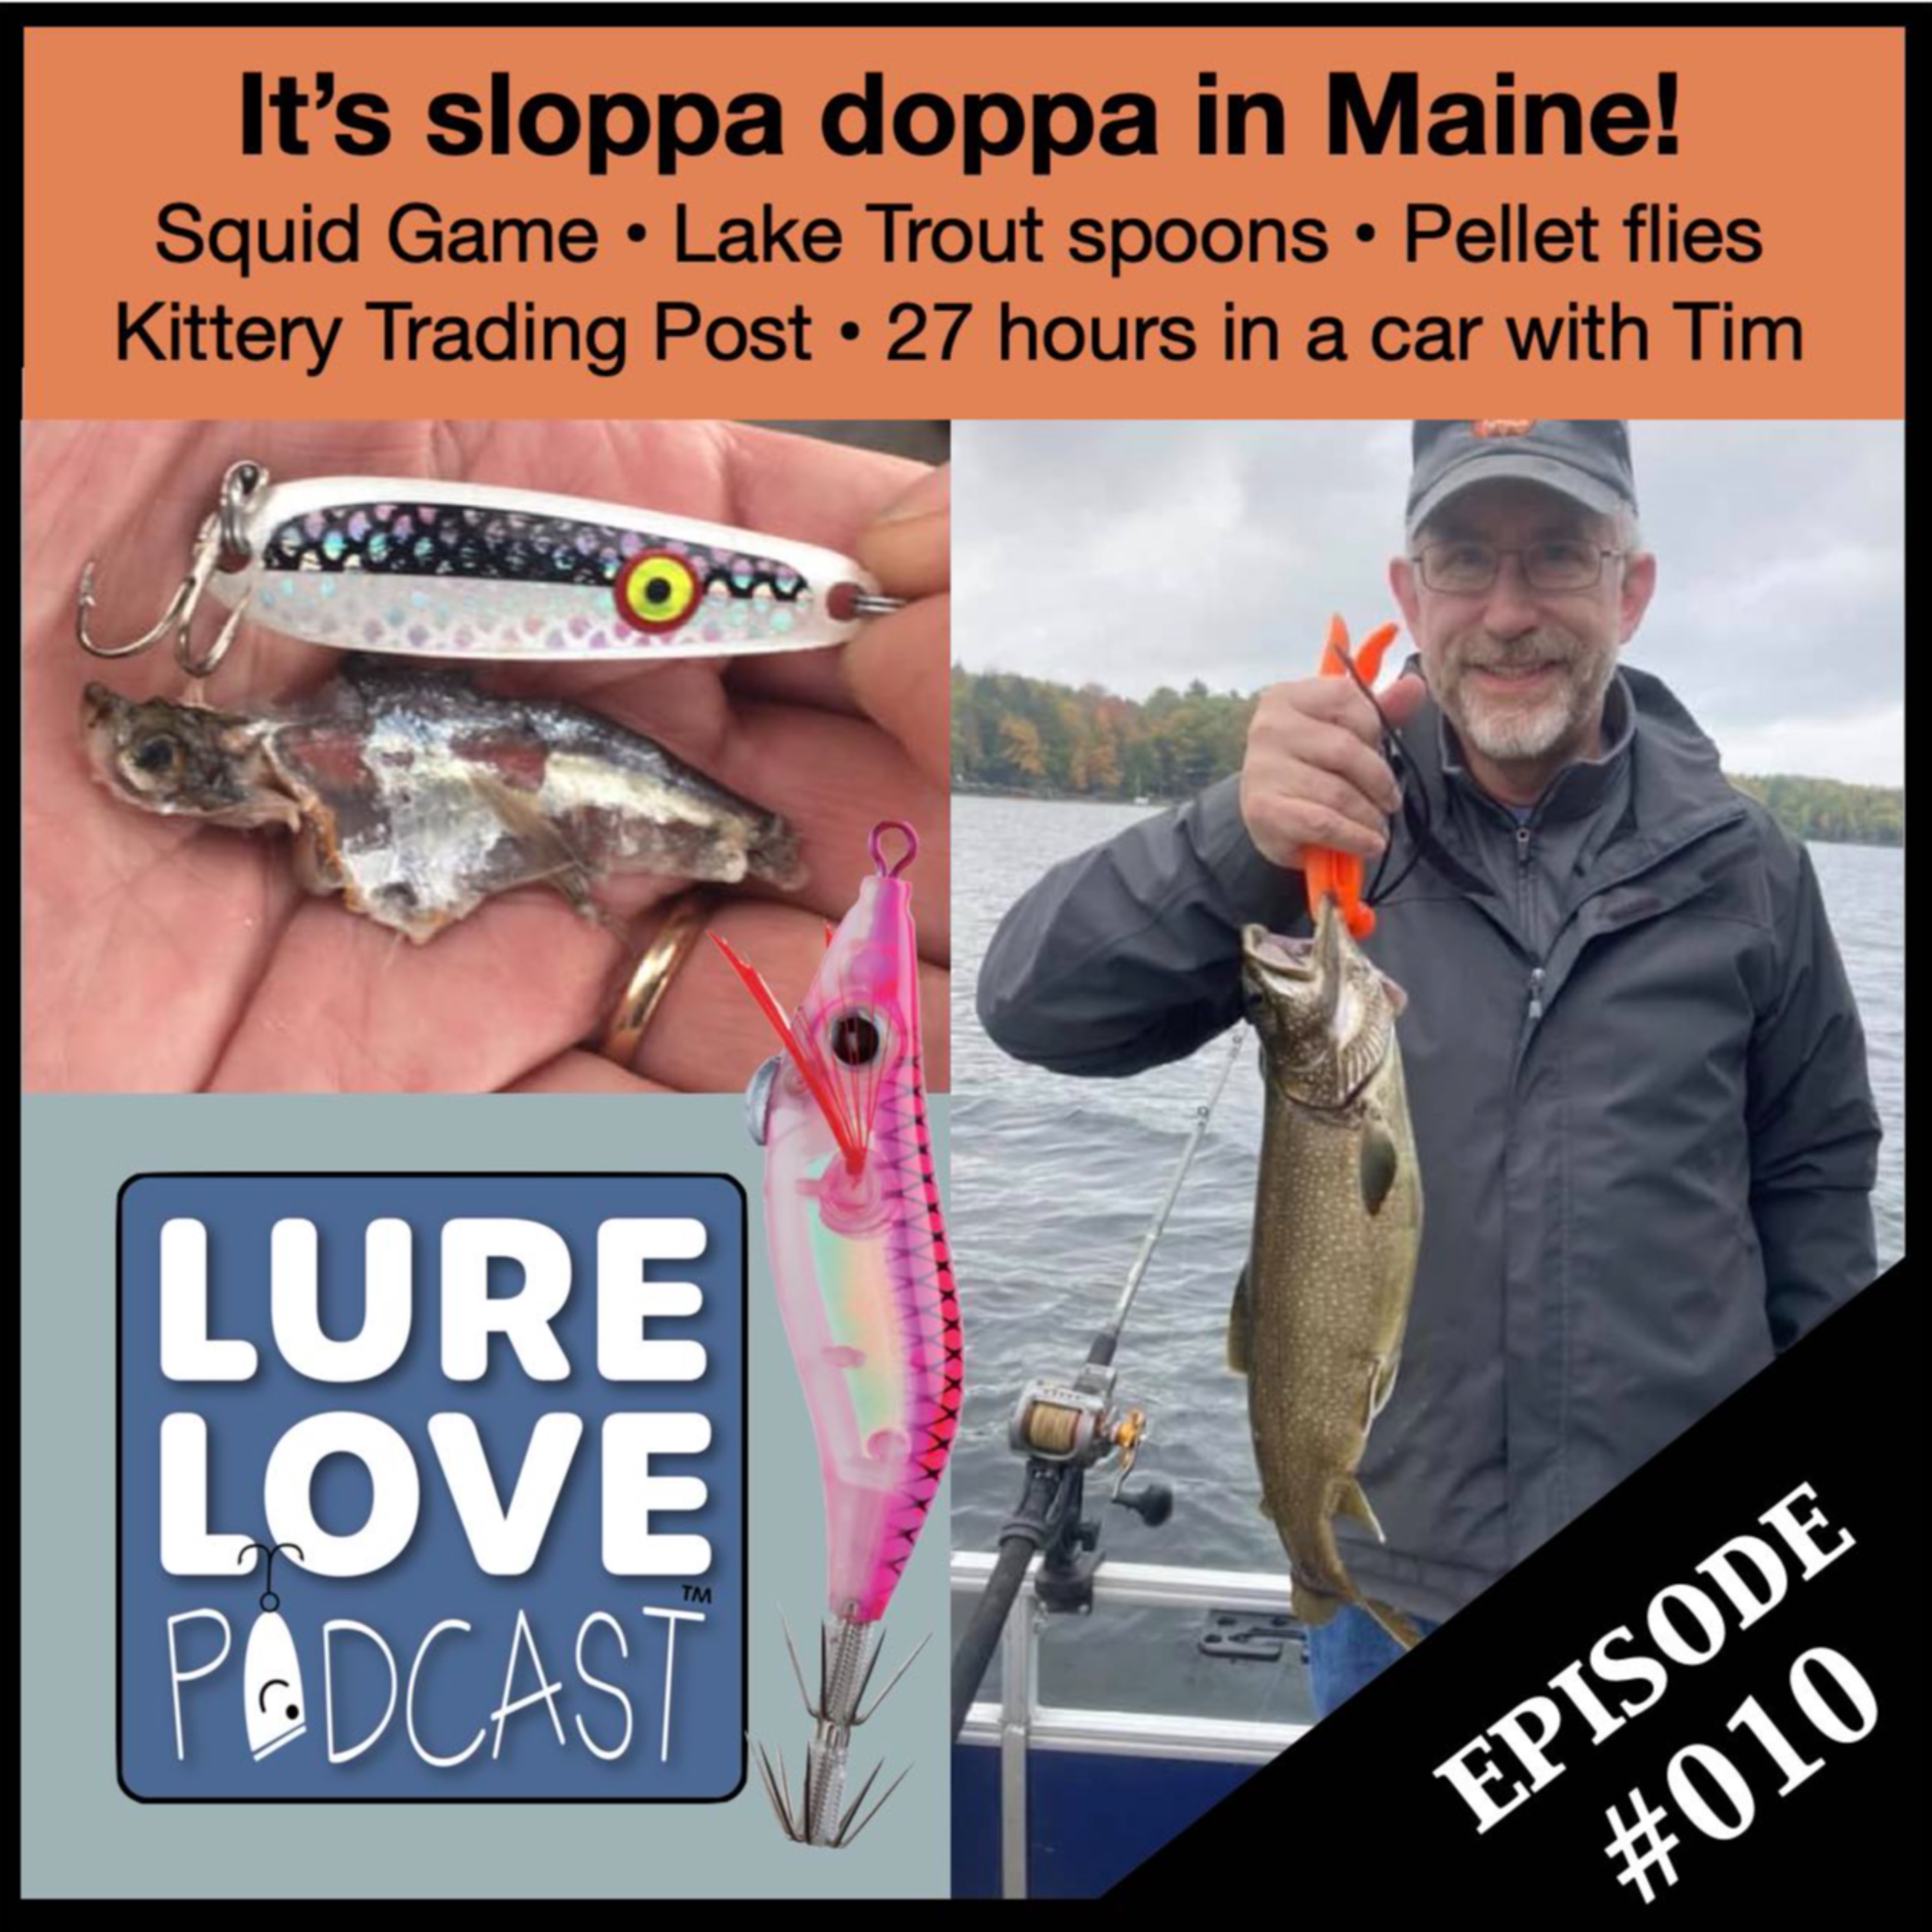 It‘s sloppa doppa in Maine!